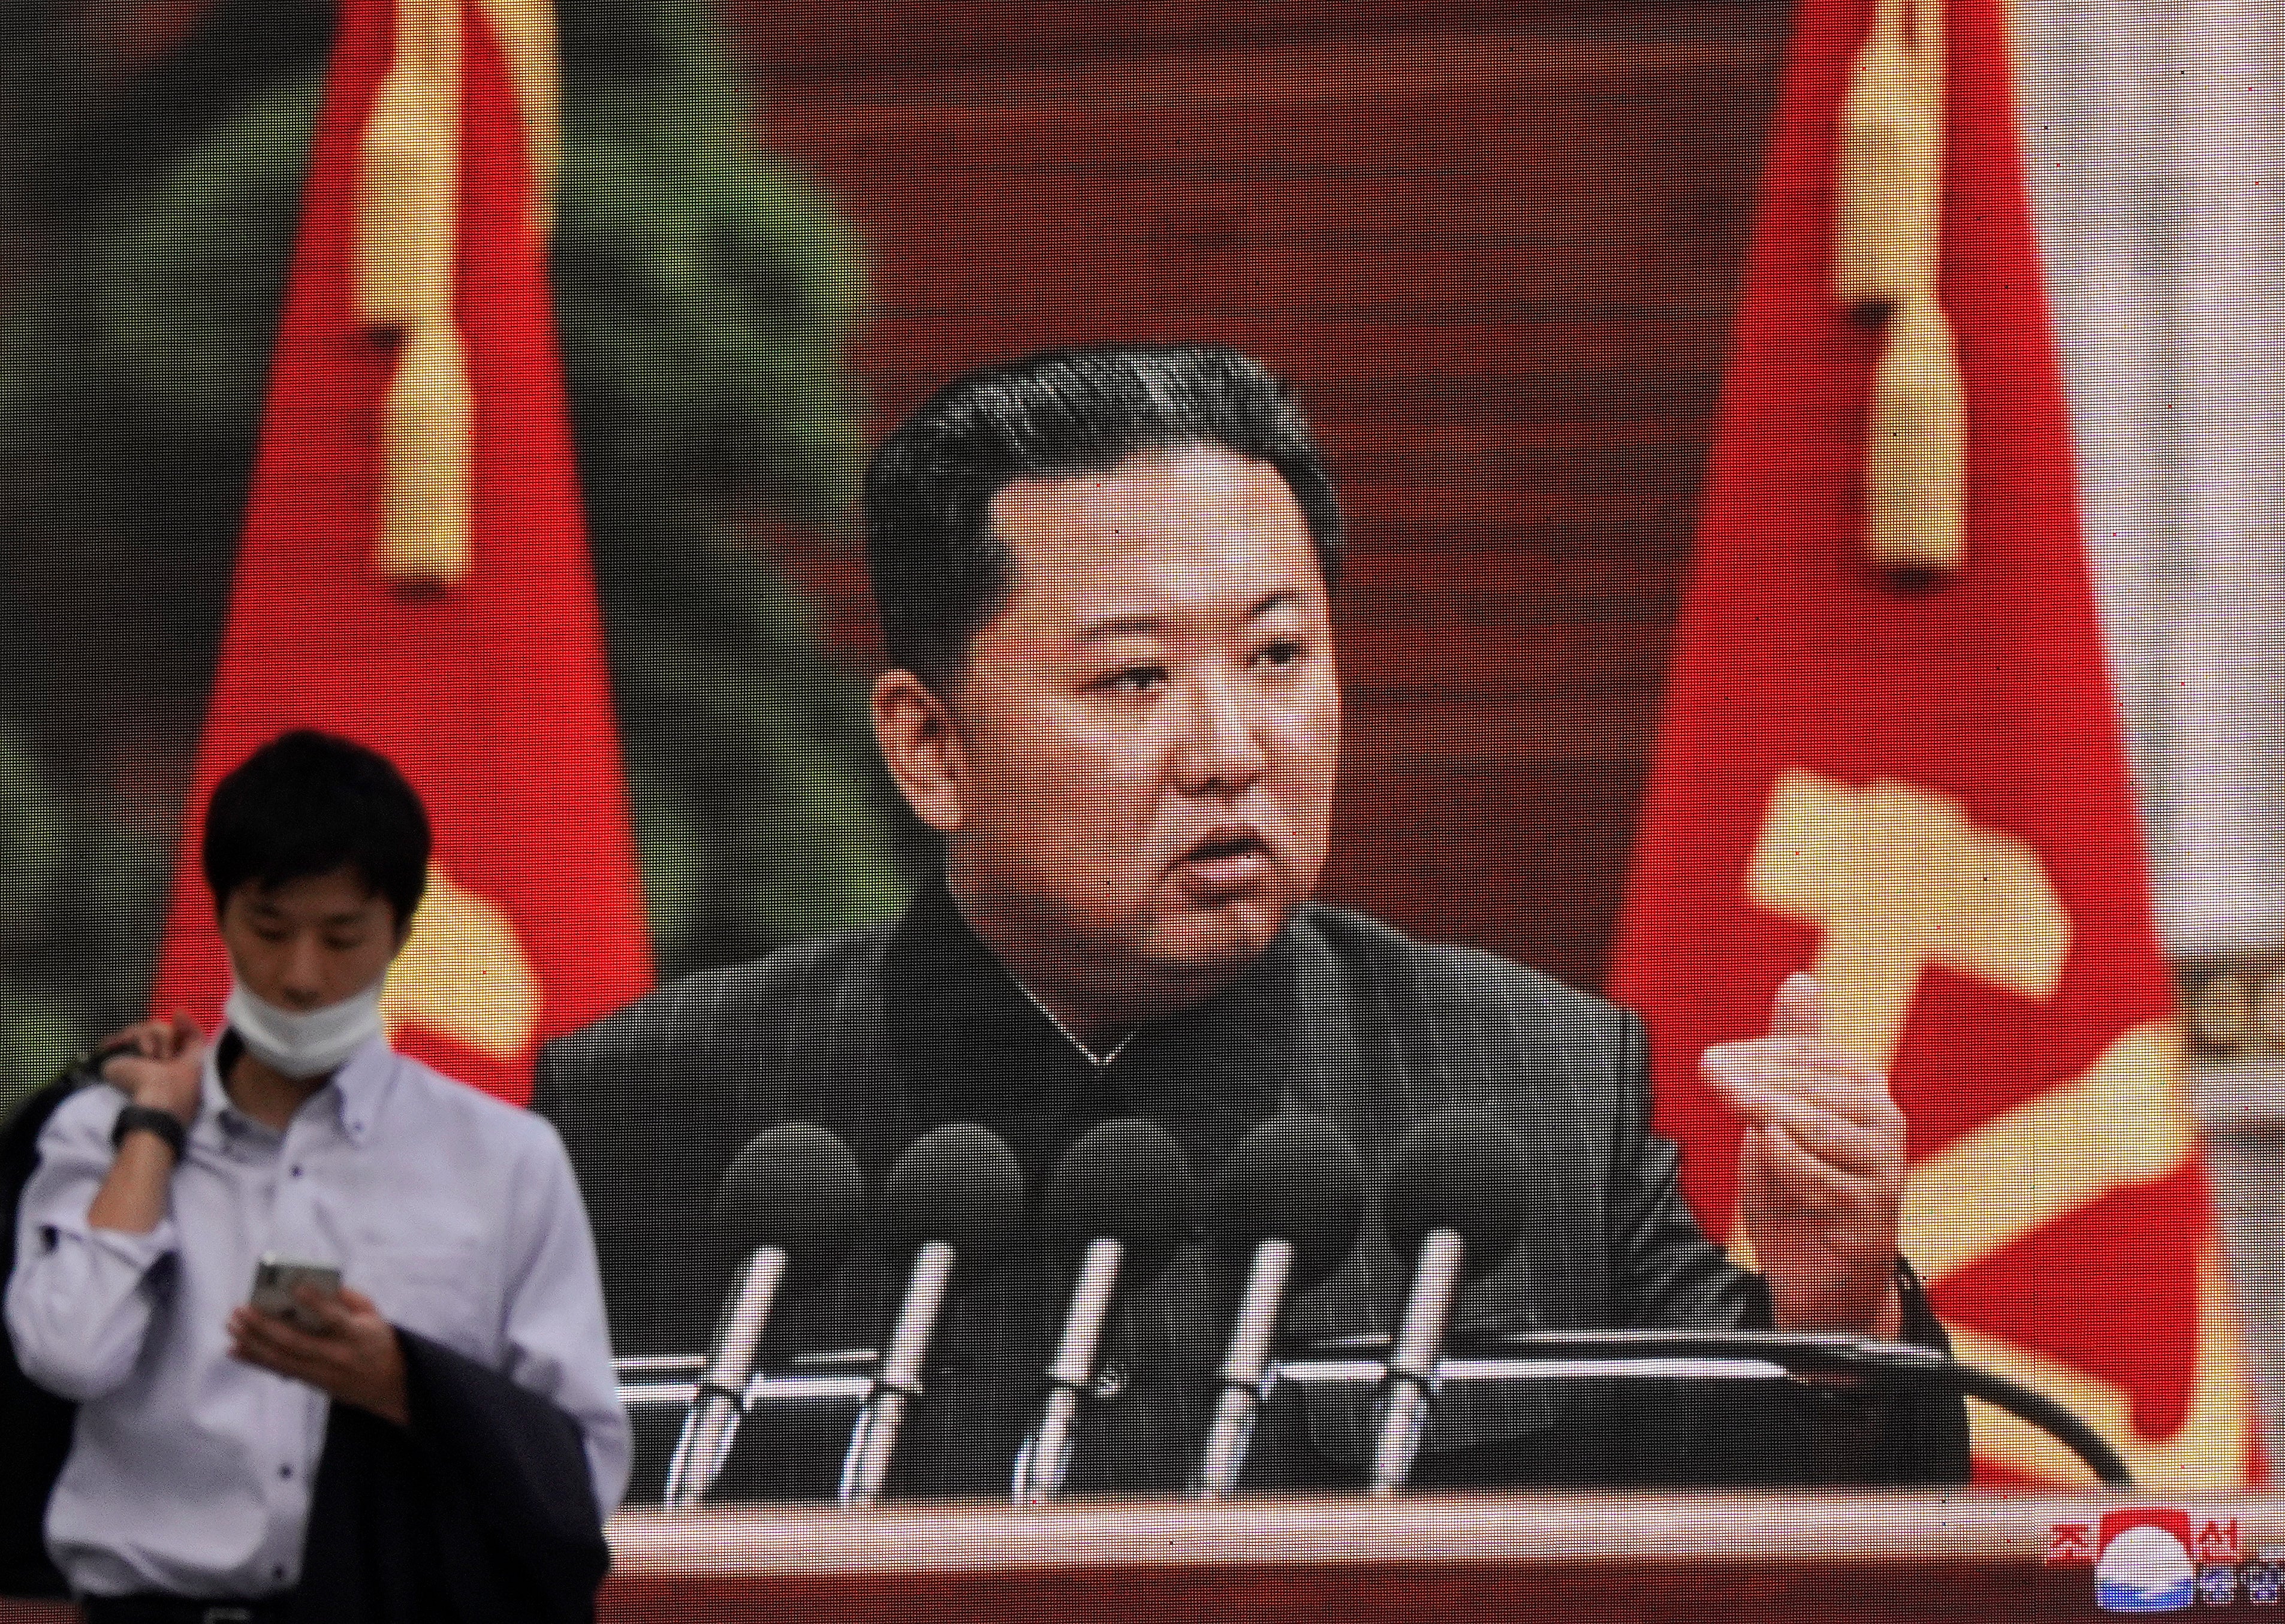 File: A pedestrian walks past a huge screen displaying North Korean leader Kim Jong-un